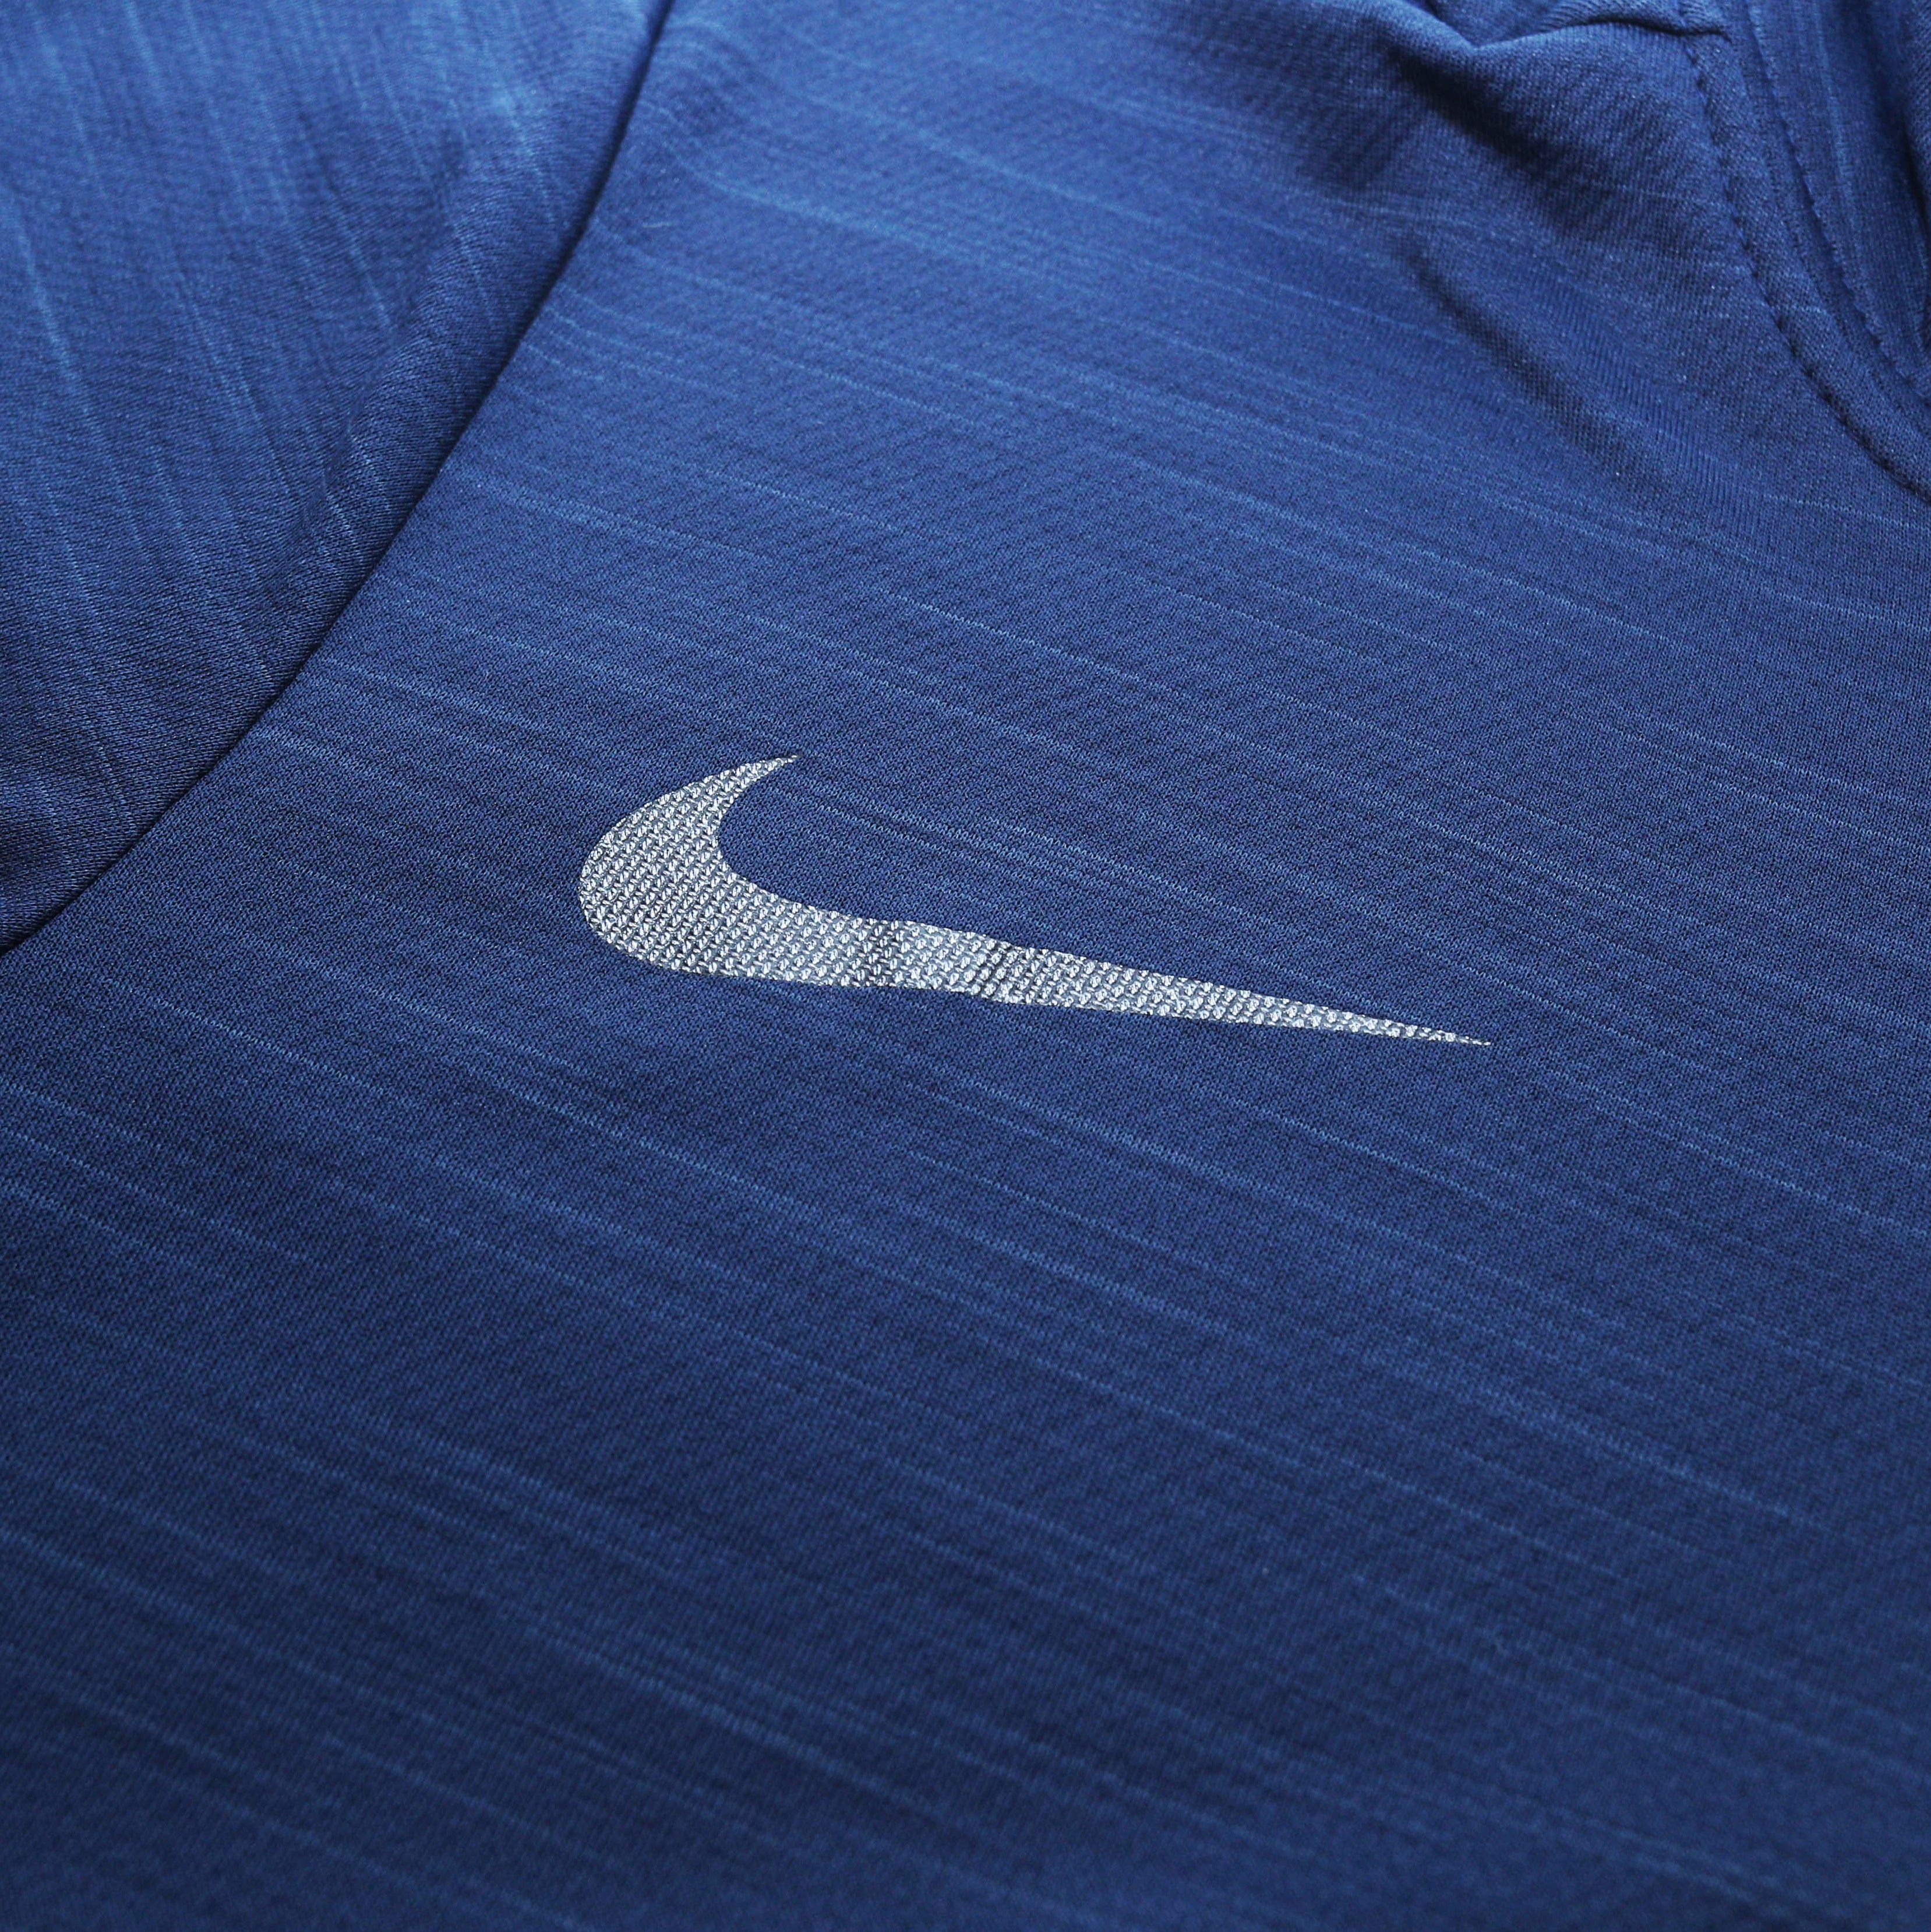 Nike Men's Intensity Quarter Zip Performance Shirt